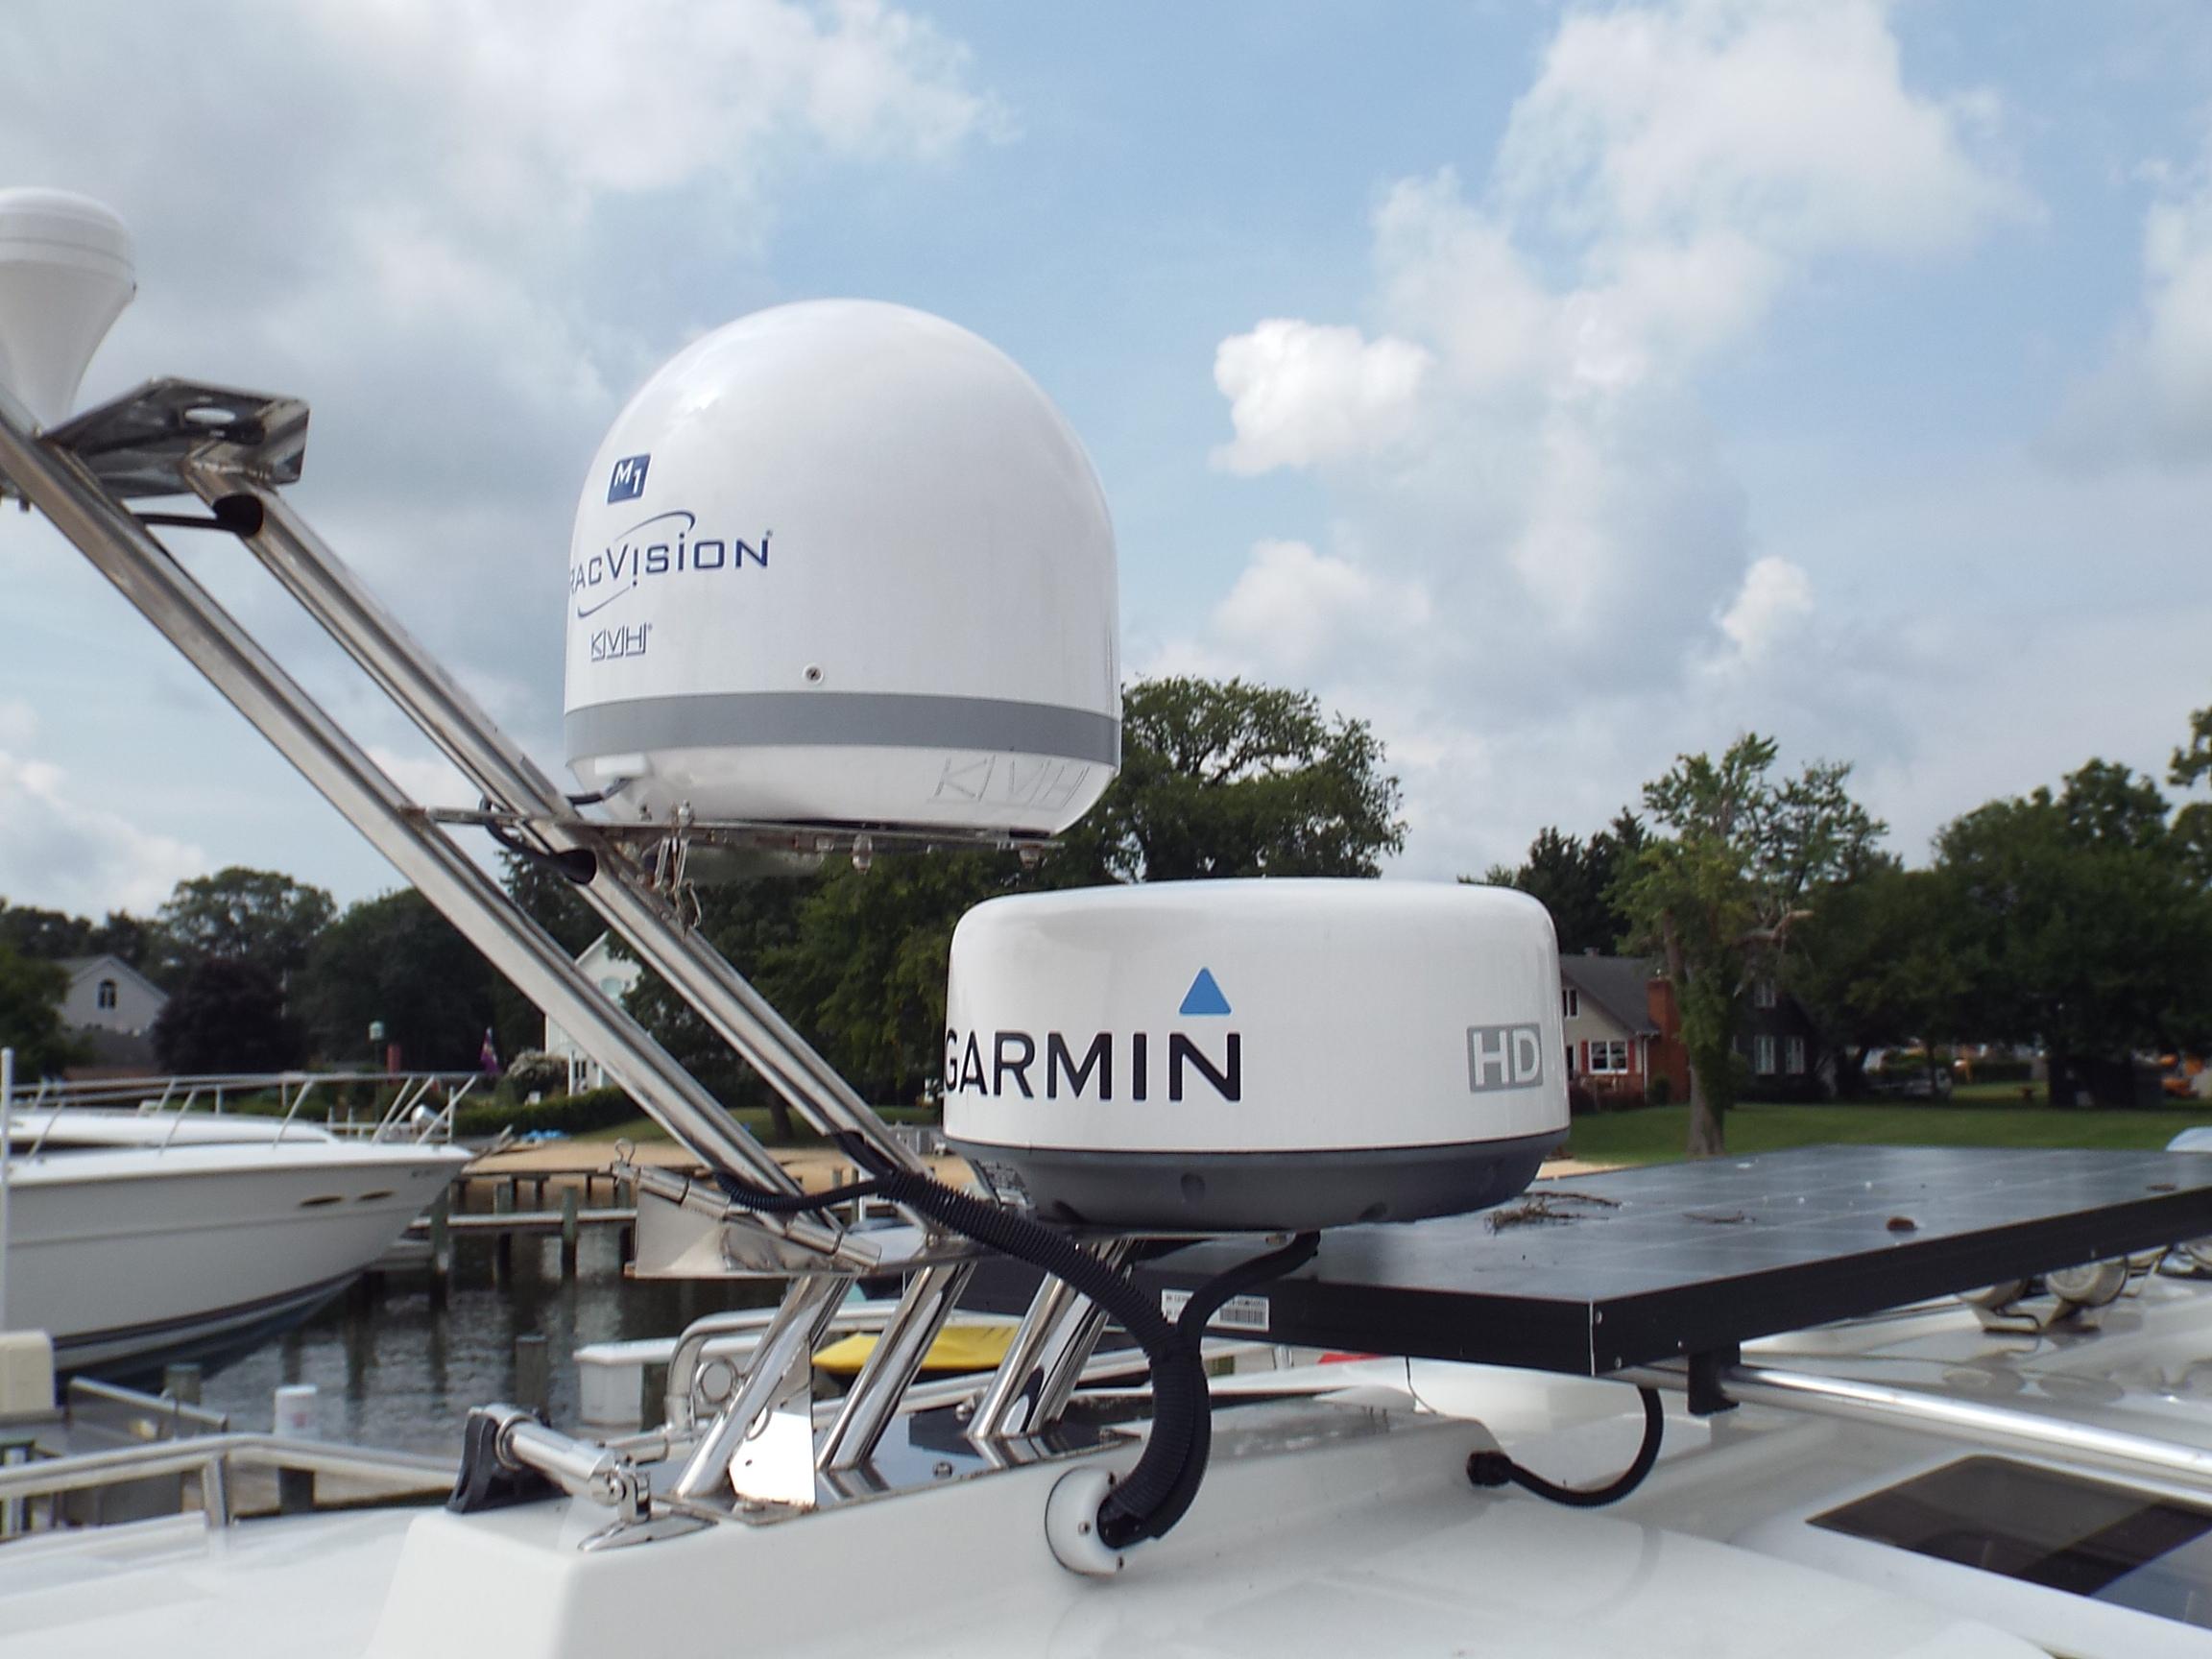 Radar,TV, SS mast and solar panel